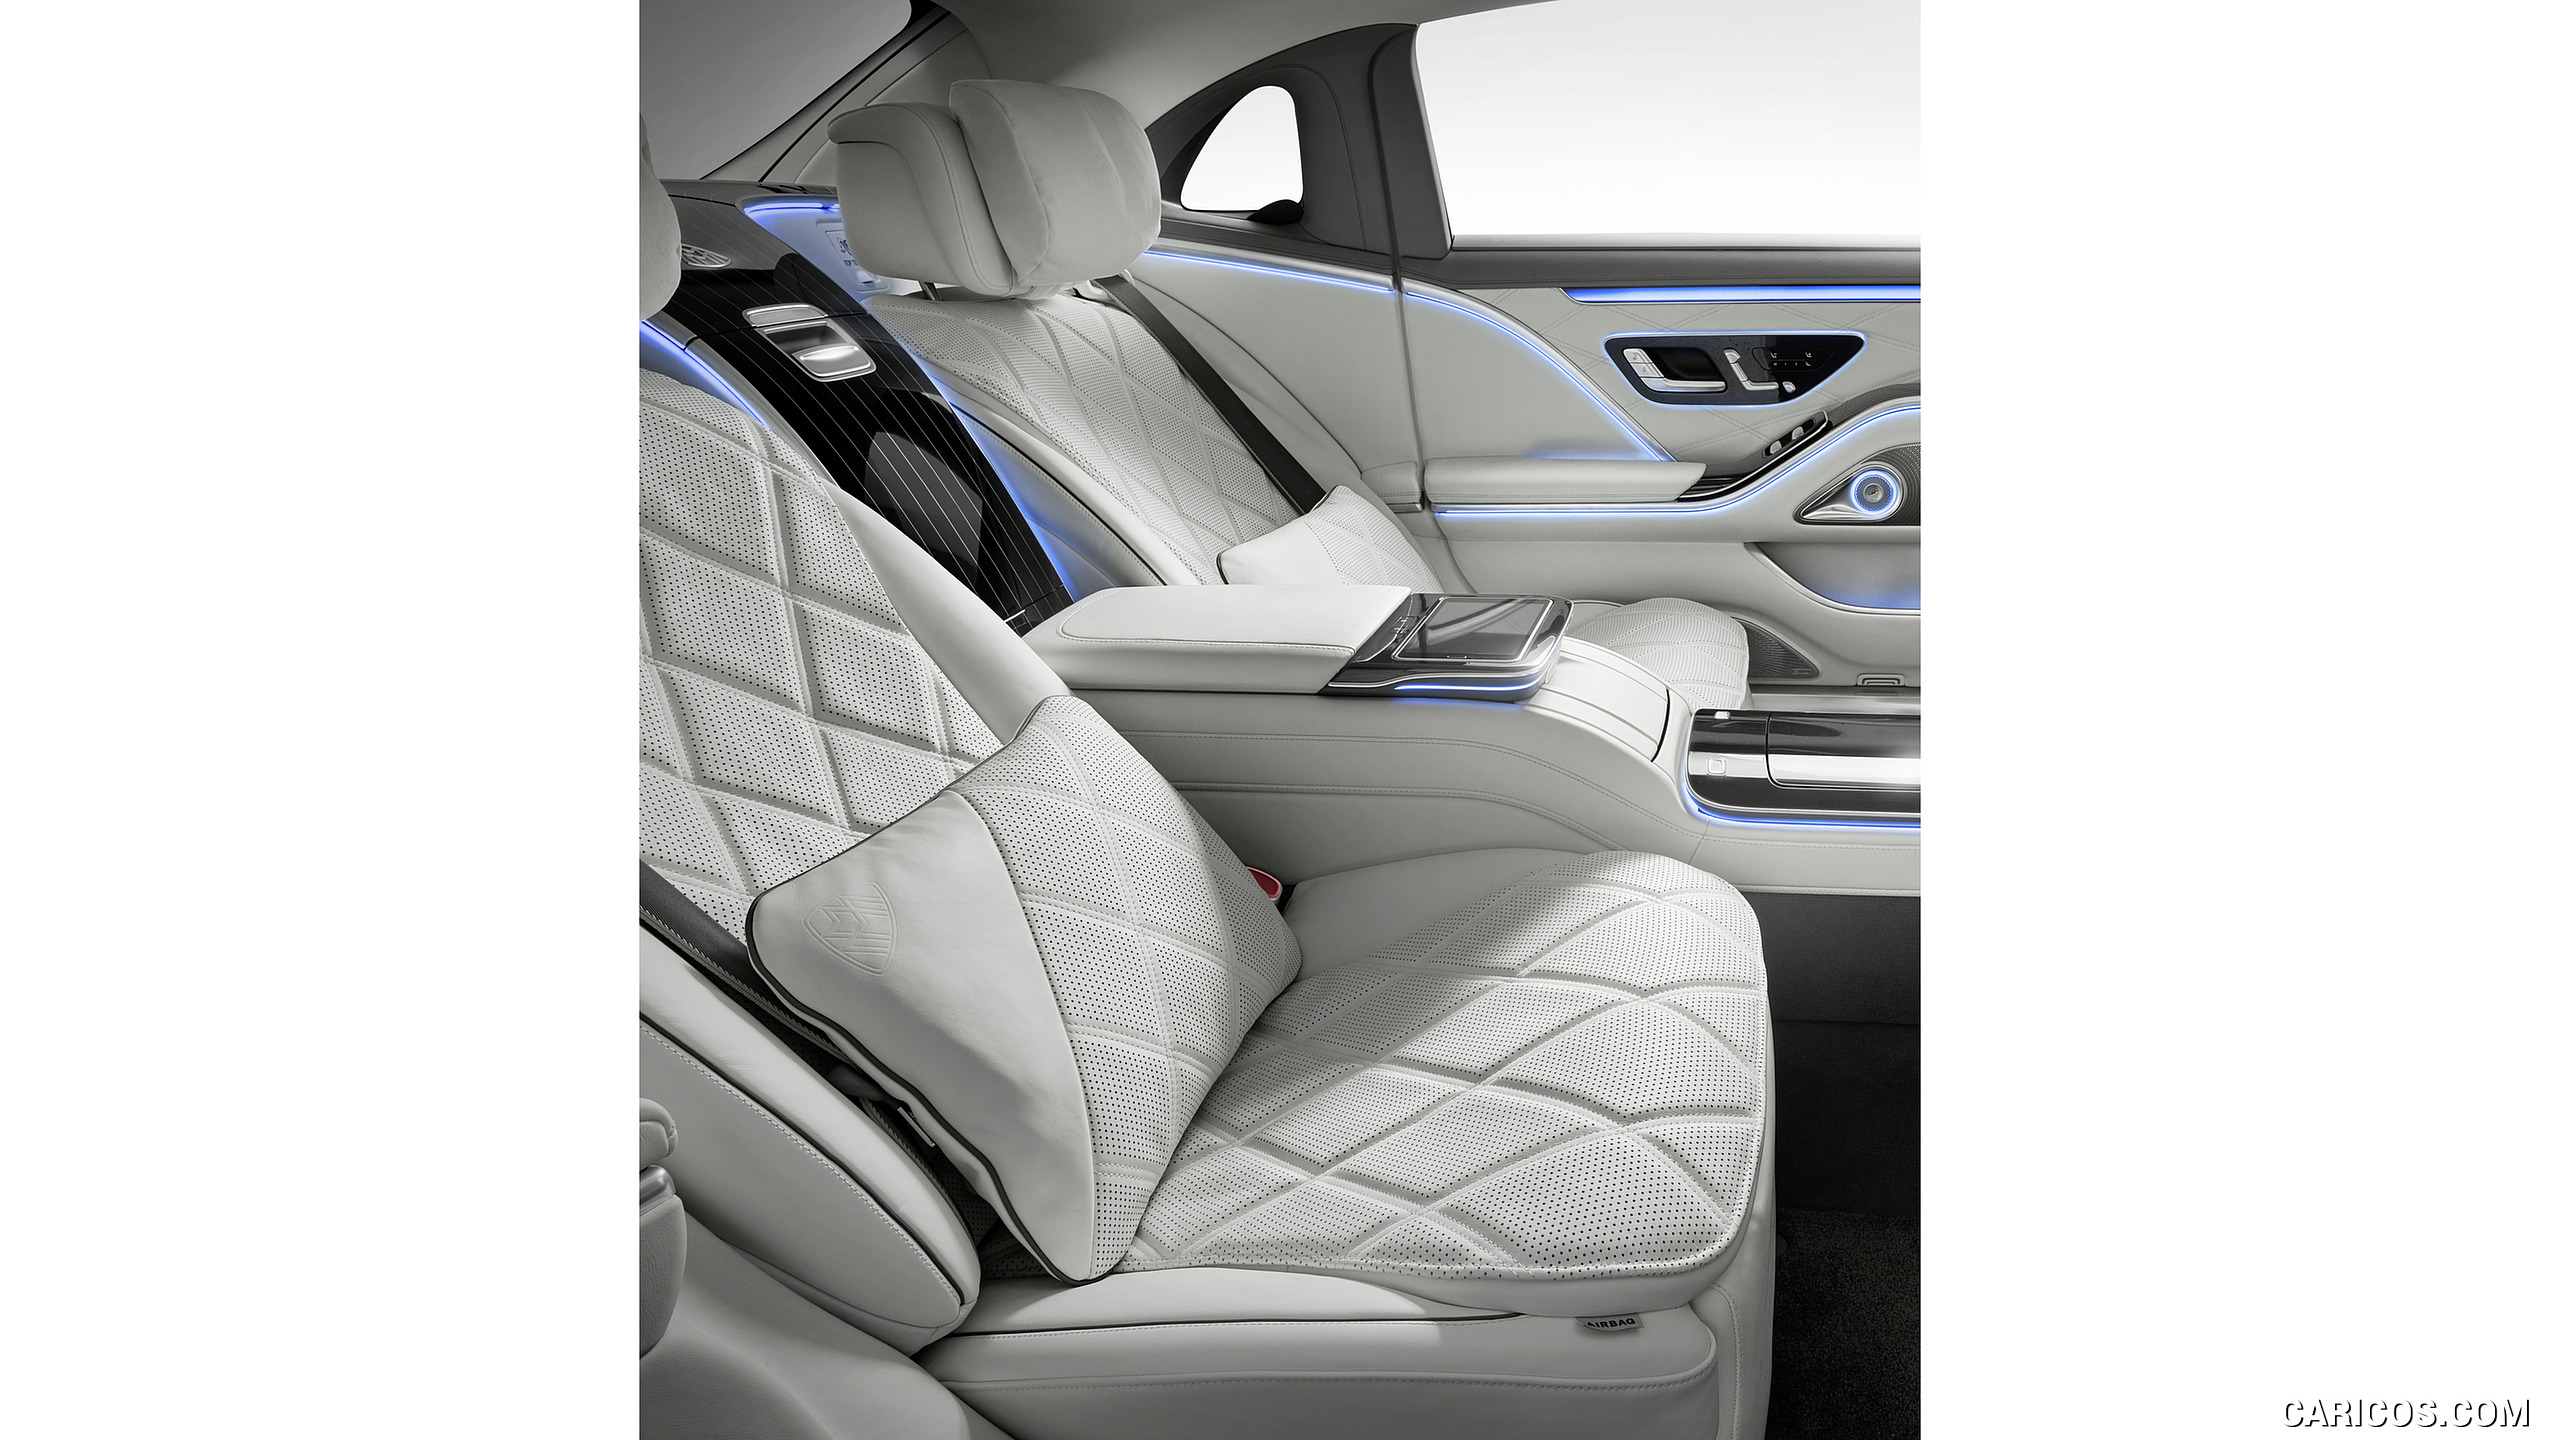 2021 Mercedes-Maybach S-Class (Color: Designo Crystal White / Silver Grey Pearl) - Interior, Rear Seats, #117 of 157